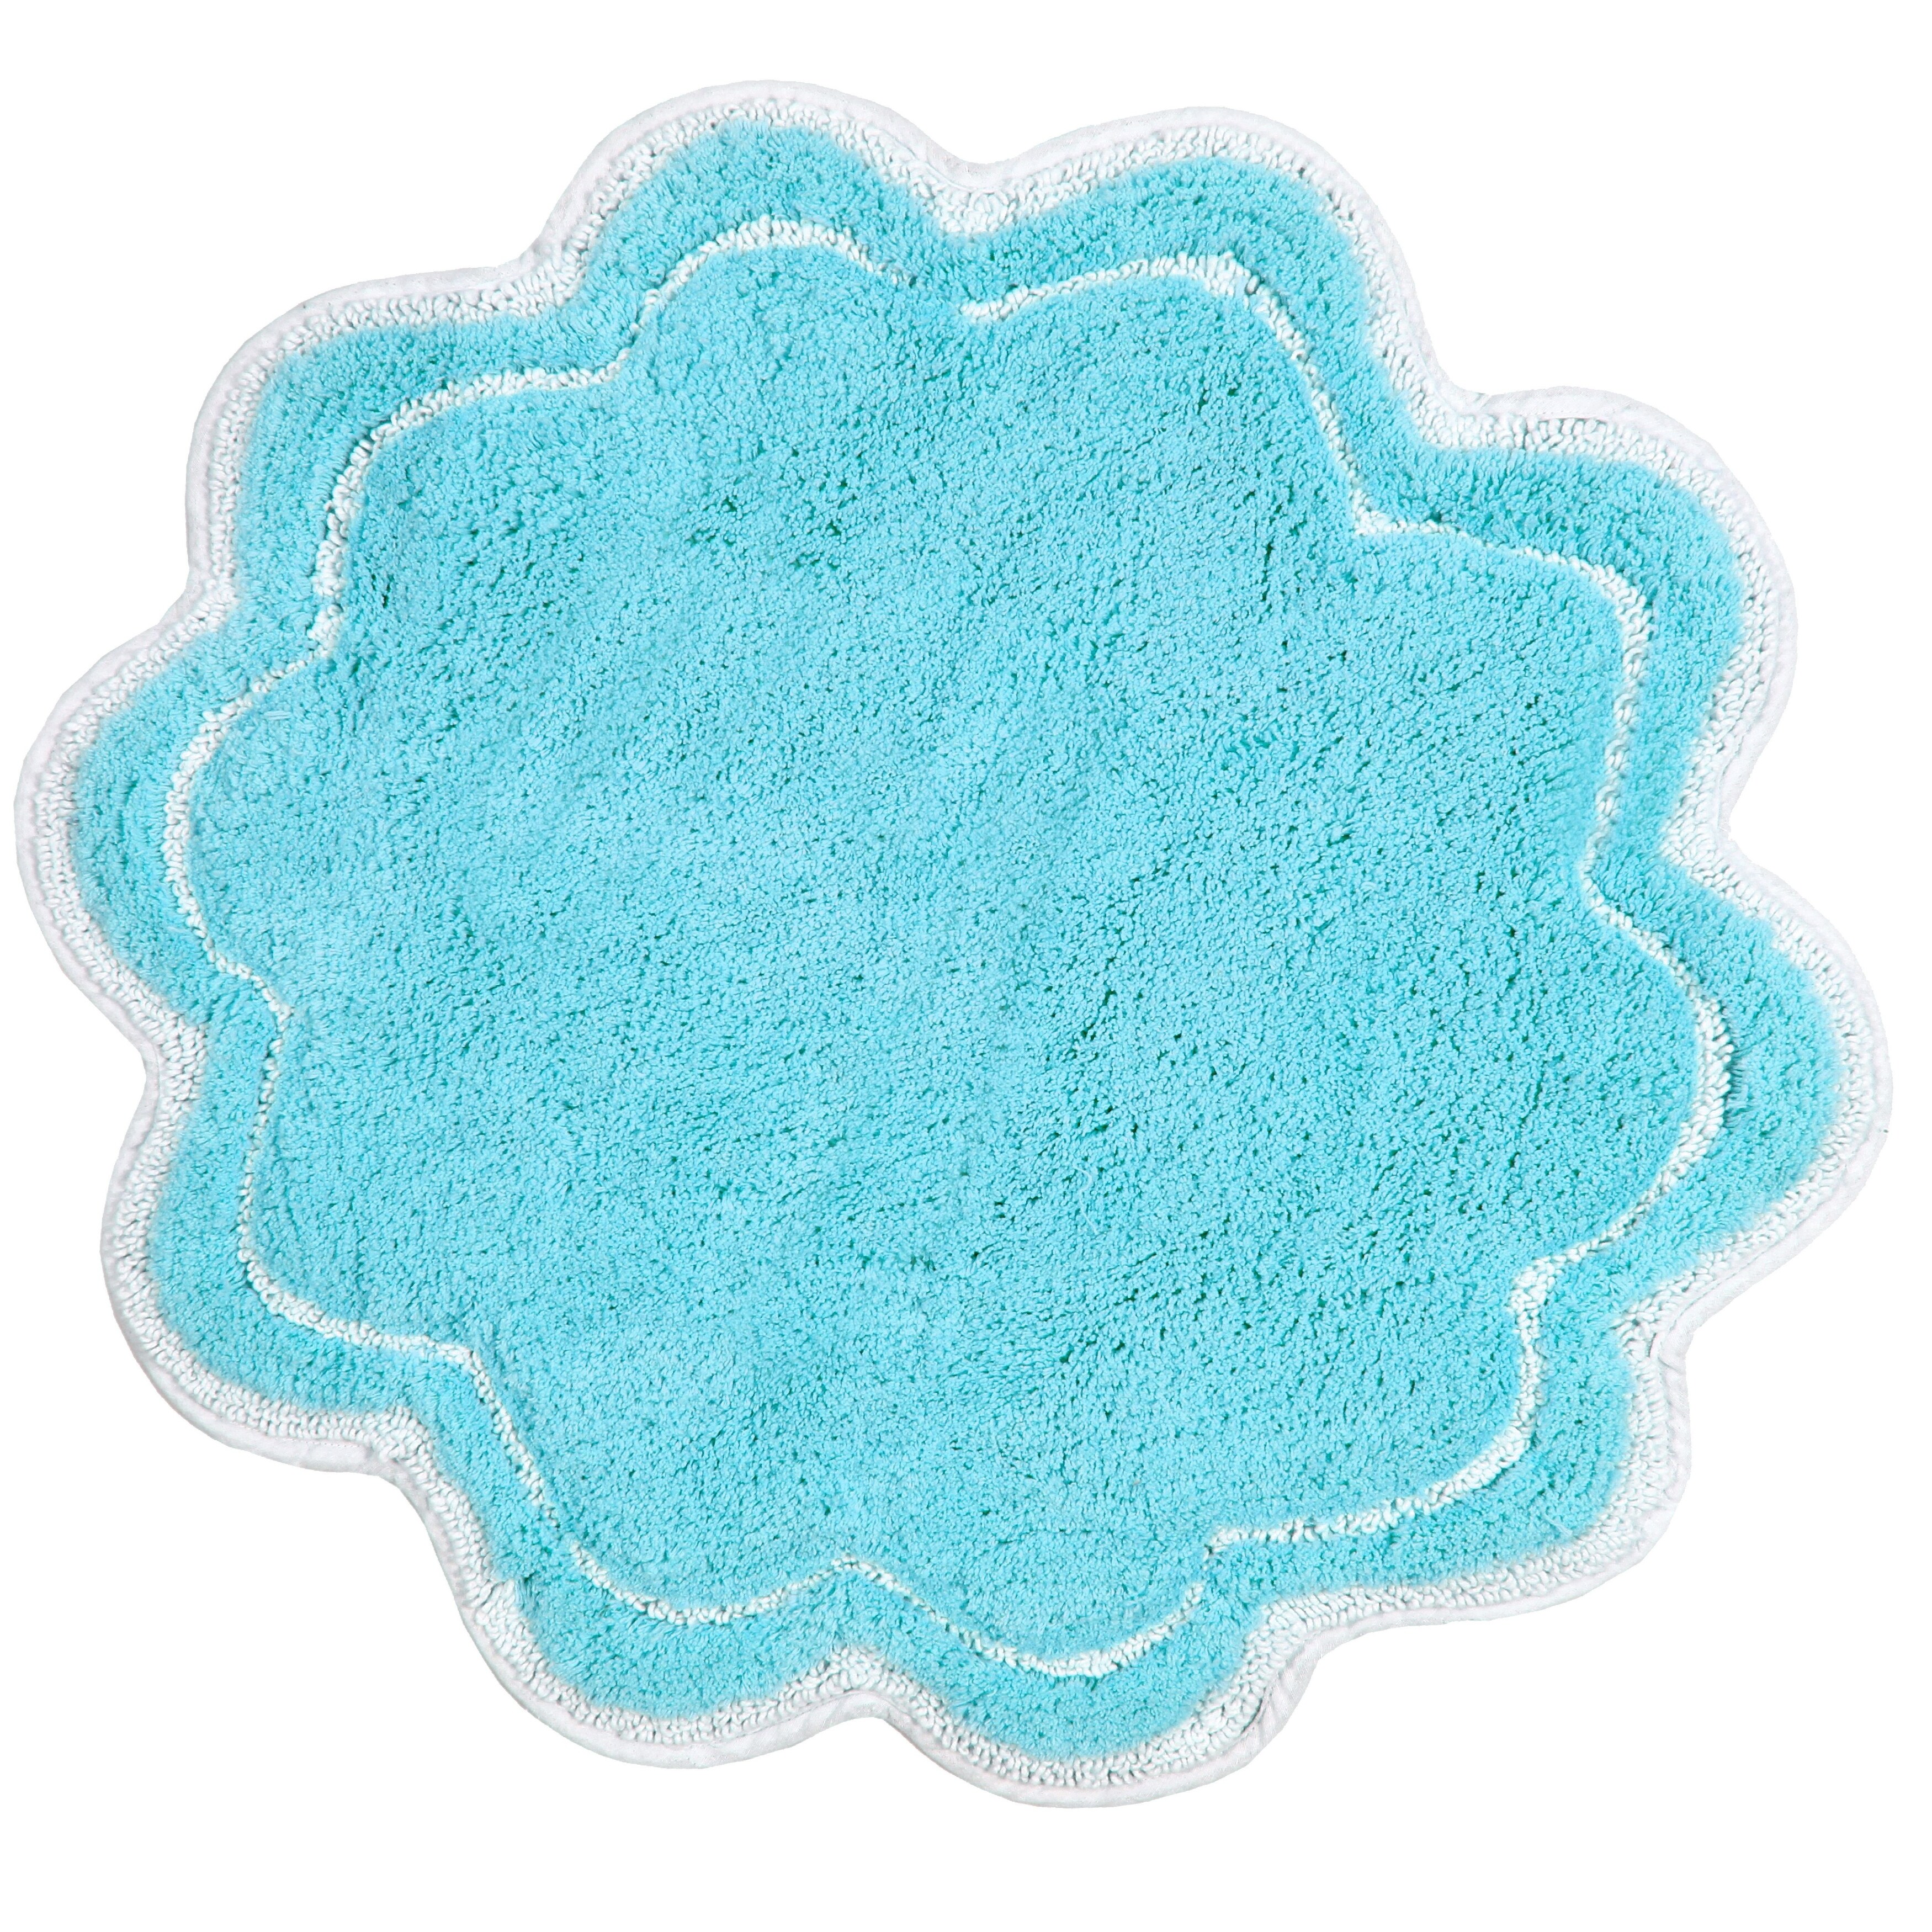 Home Weavers Classy Bathmat Collection - Absorbent Cotton Soft Bath Rug Machine Washable 21 inchx54 inch Blue Size 21 x 54